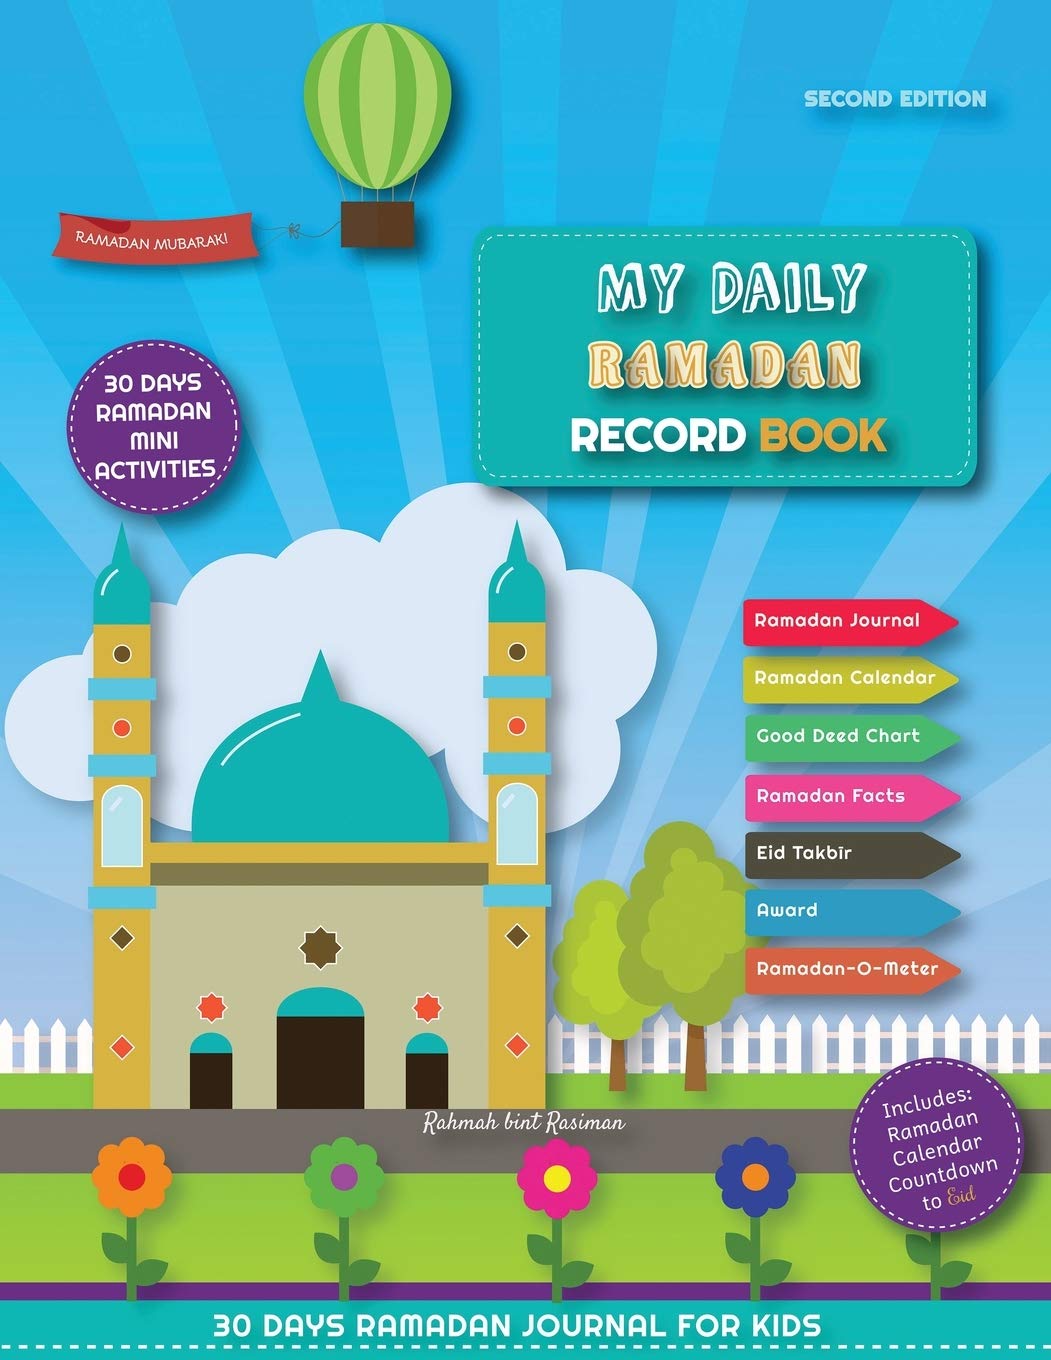 My Daily Ramadan Record Book (30 days Ramadan Mini Activities)